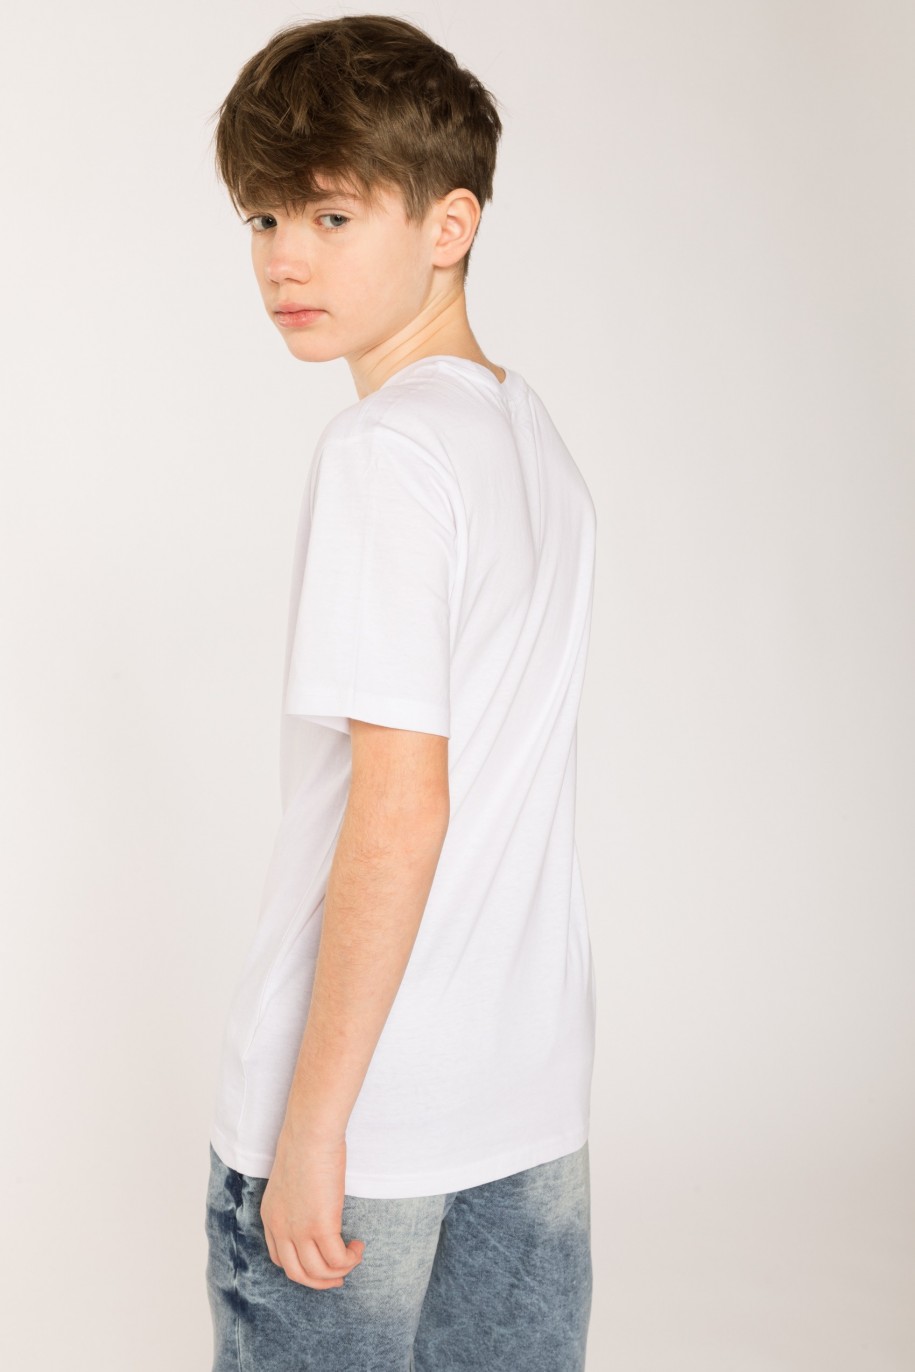 Biały t-shirt dla chłopaka ALLERGIC 2 MORNINGS - 27831